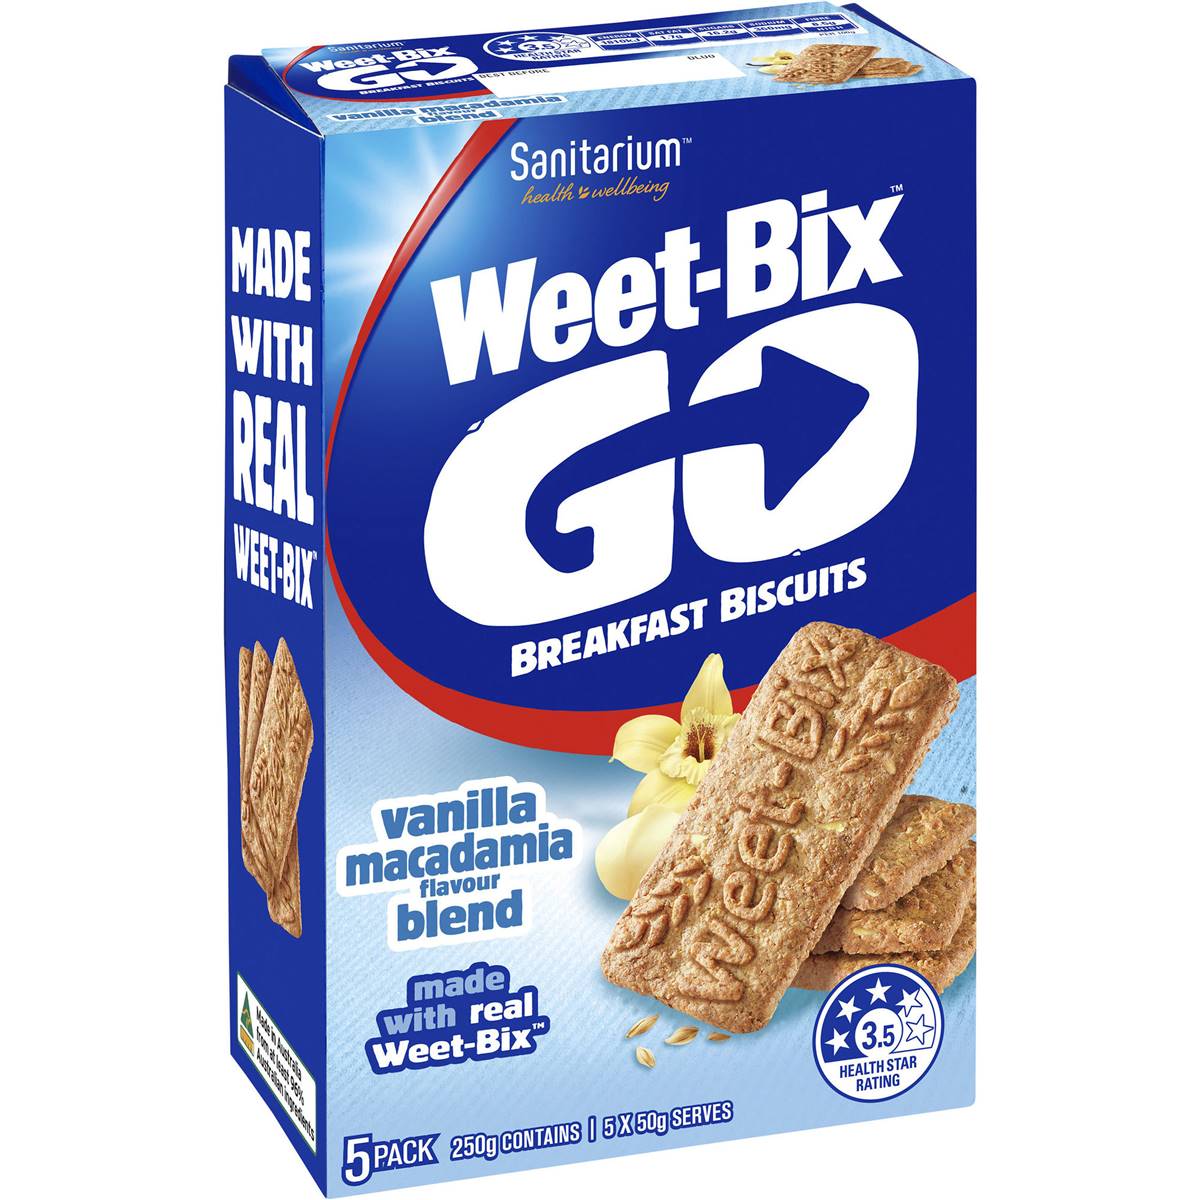 Sanitarium Weet-bix Go Breakfast Biscuits Vanilla & Macadamia Blend